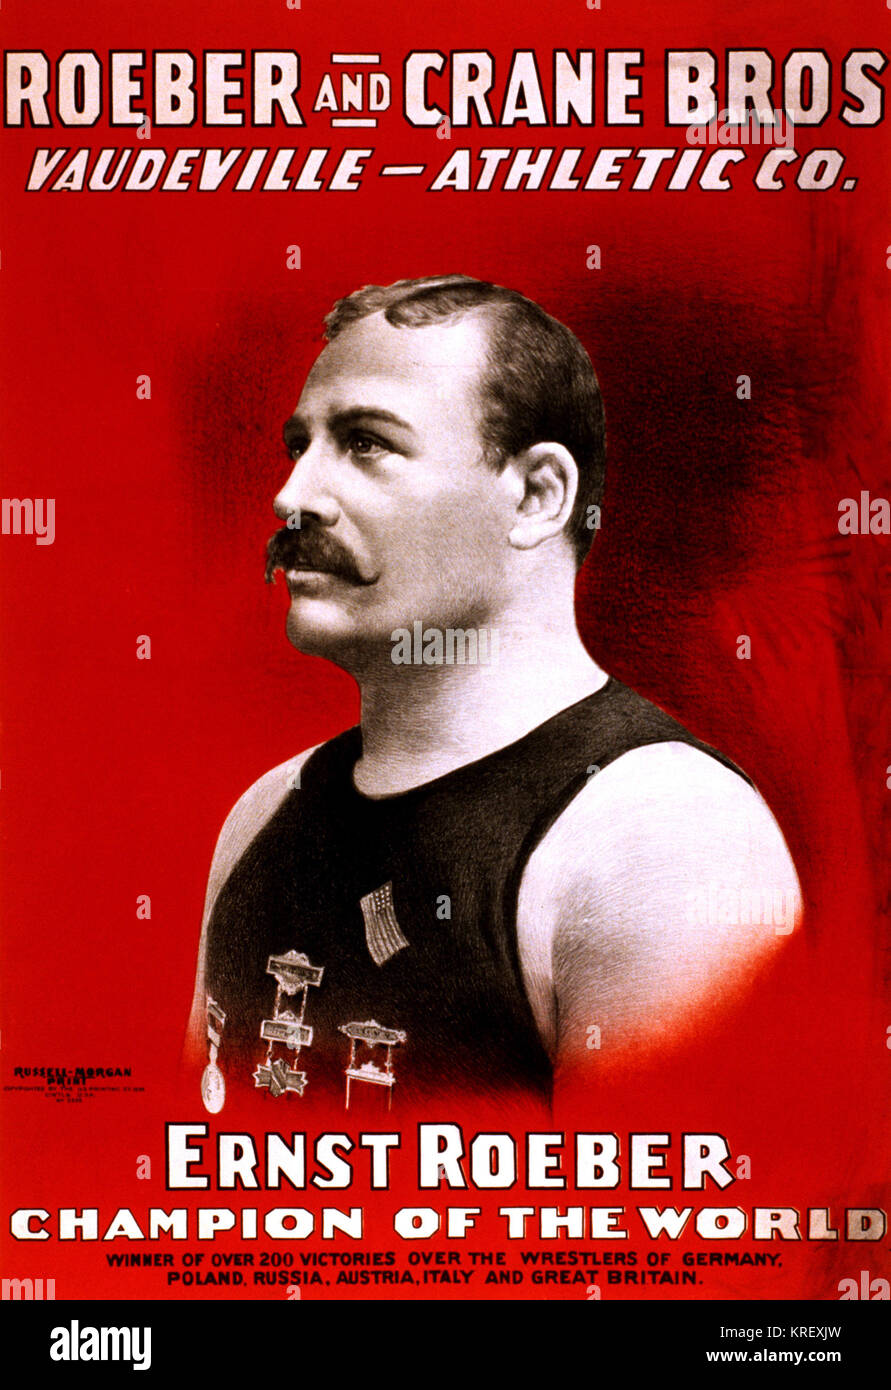 Roeber and Crane Bros. Vaudeville Athletic Co.: Ernst Roeber, champion of the world, wrestling poster Stock Photo